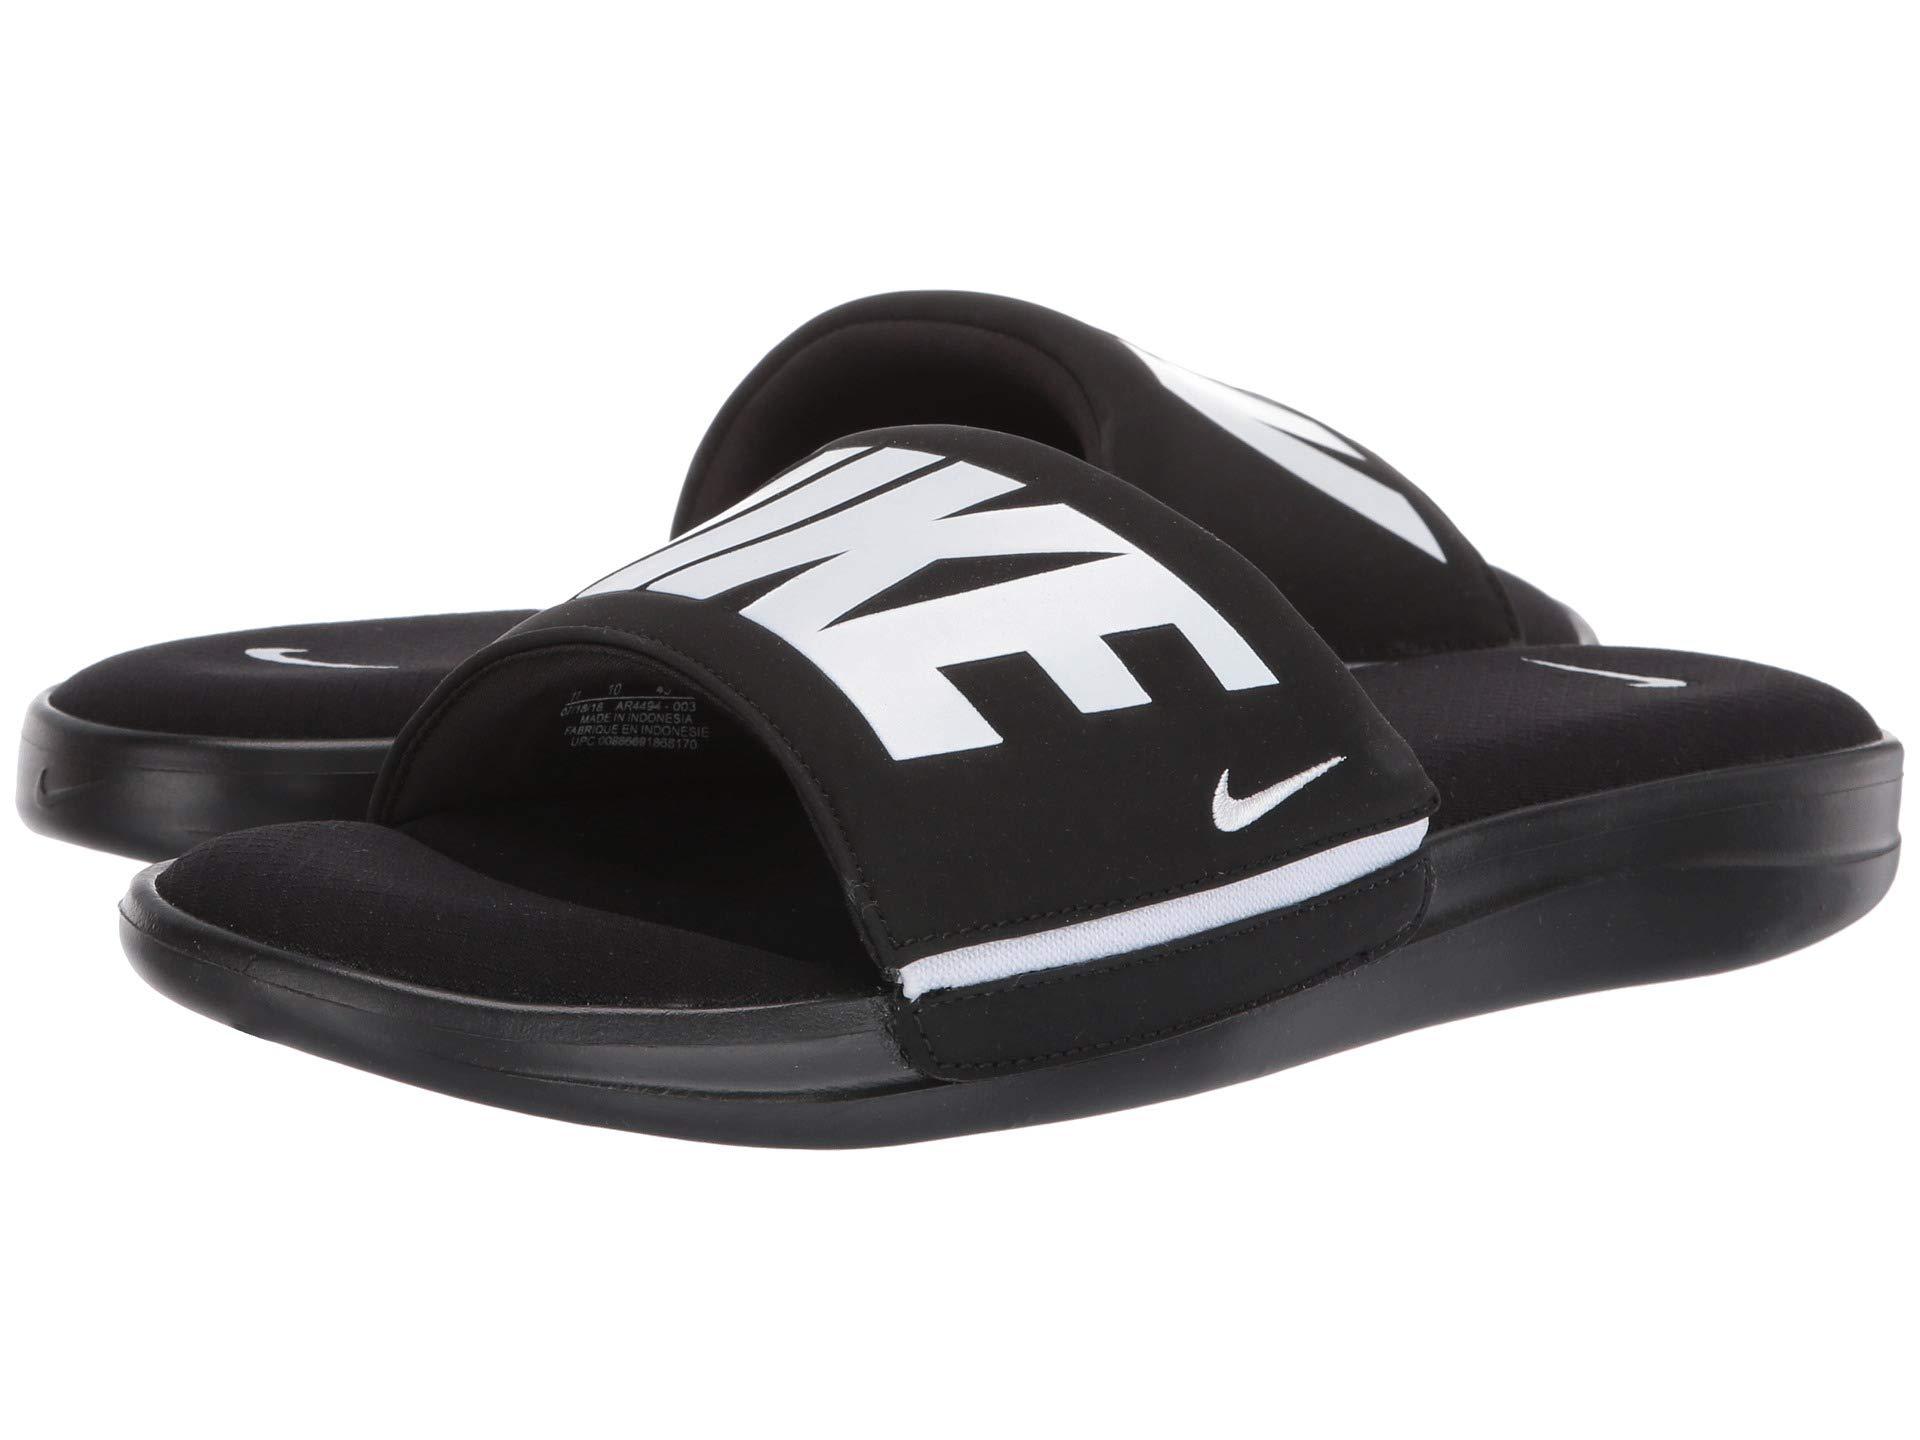 https://cdna.lystit.com/photos/zappos/1f968eb2/nike-BlackWhiteBlack-Ultra-Comfort-3-Slide-blackwhiteblack-Mens-Slide-Shoes.jpeg